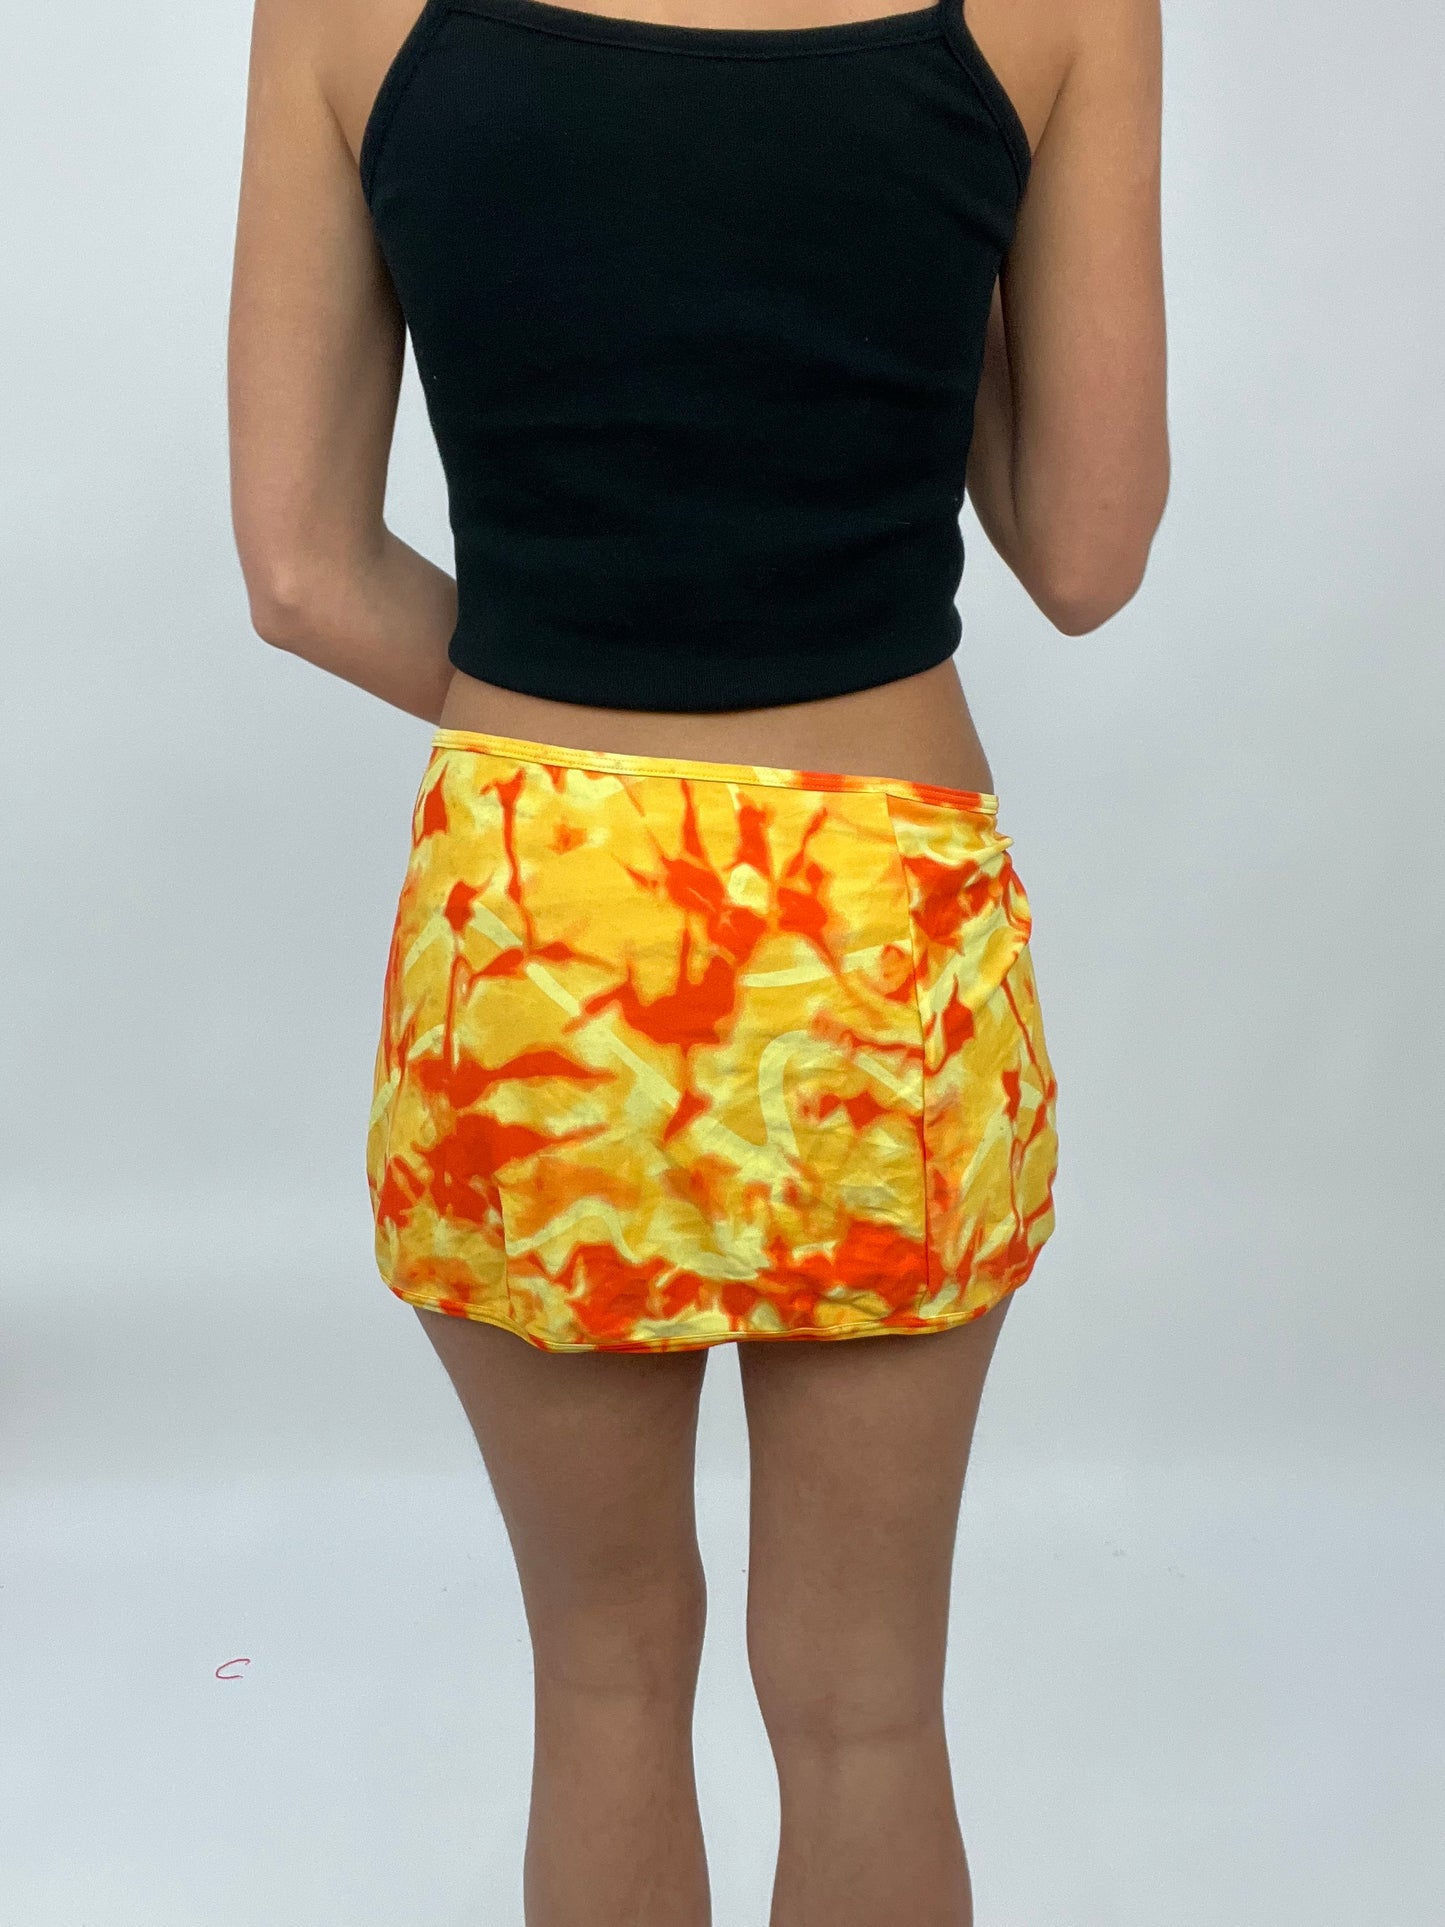 COCONUT GIRL DROP | orange and yellow tie dye wrap skirt